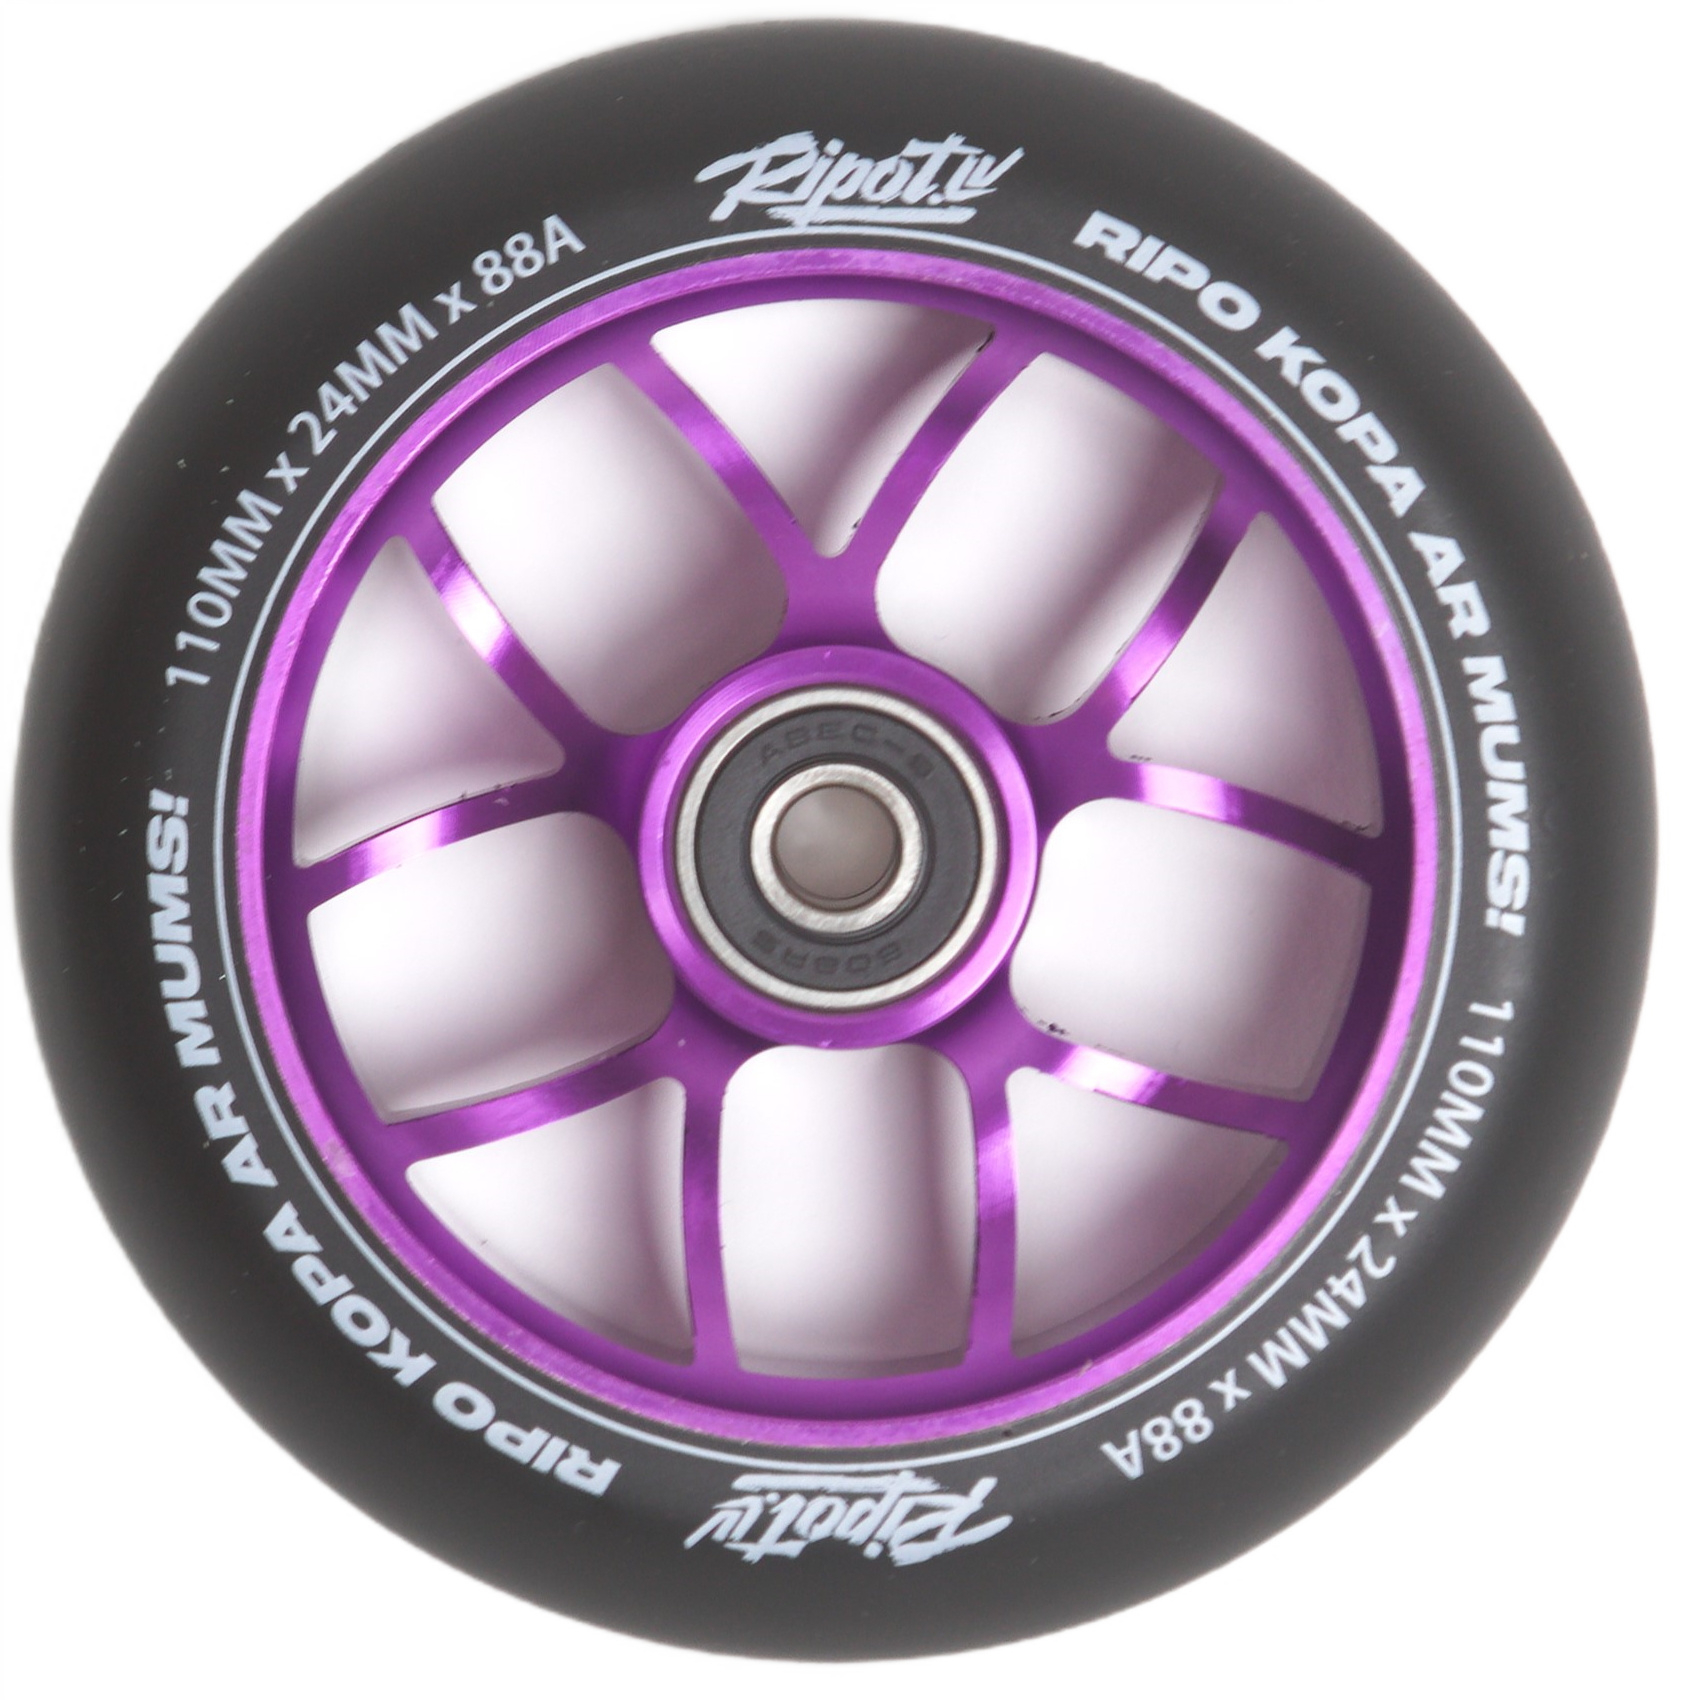 Ripot.lv Signature Pro Scooter wheel 110mm